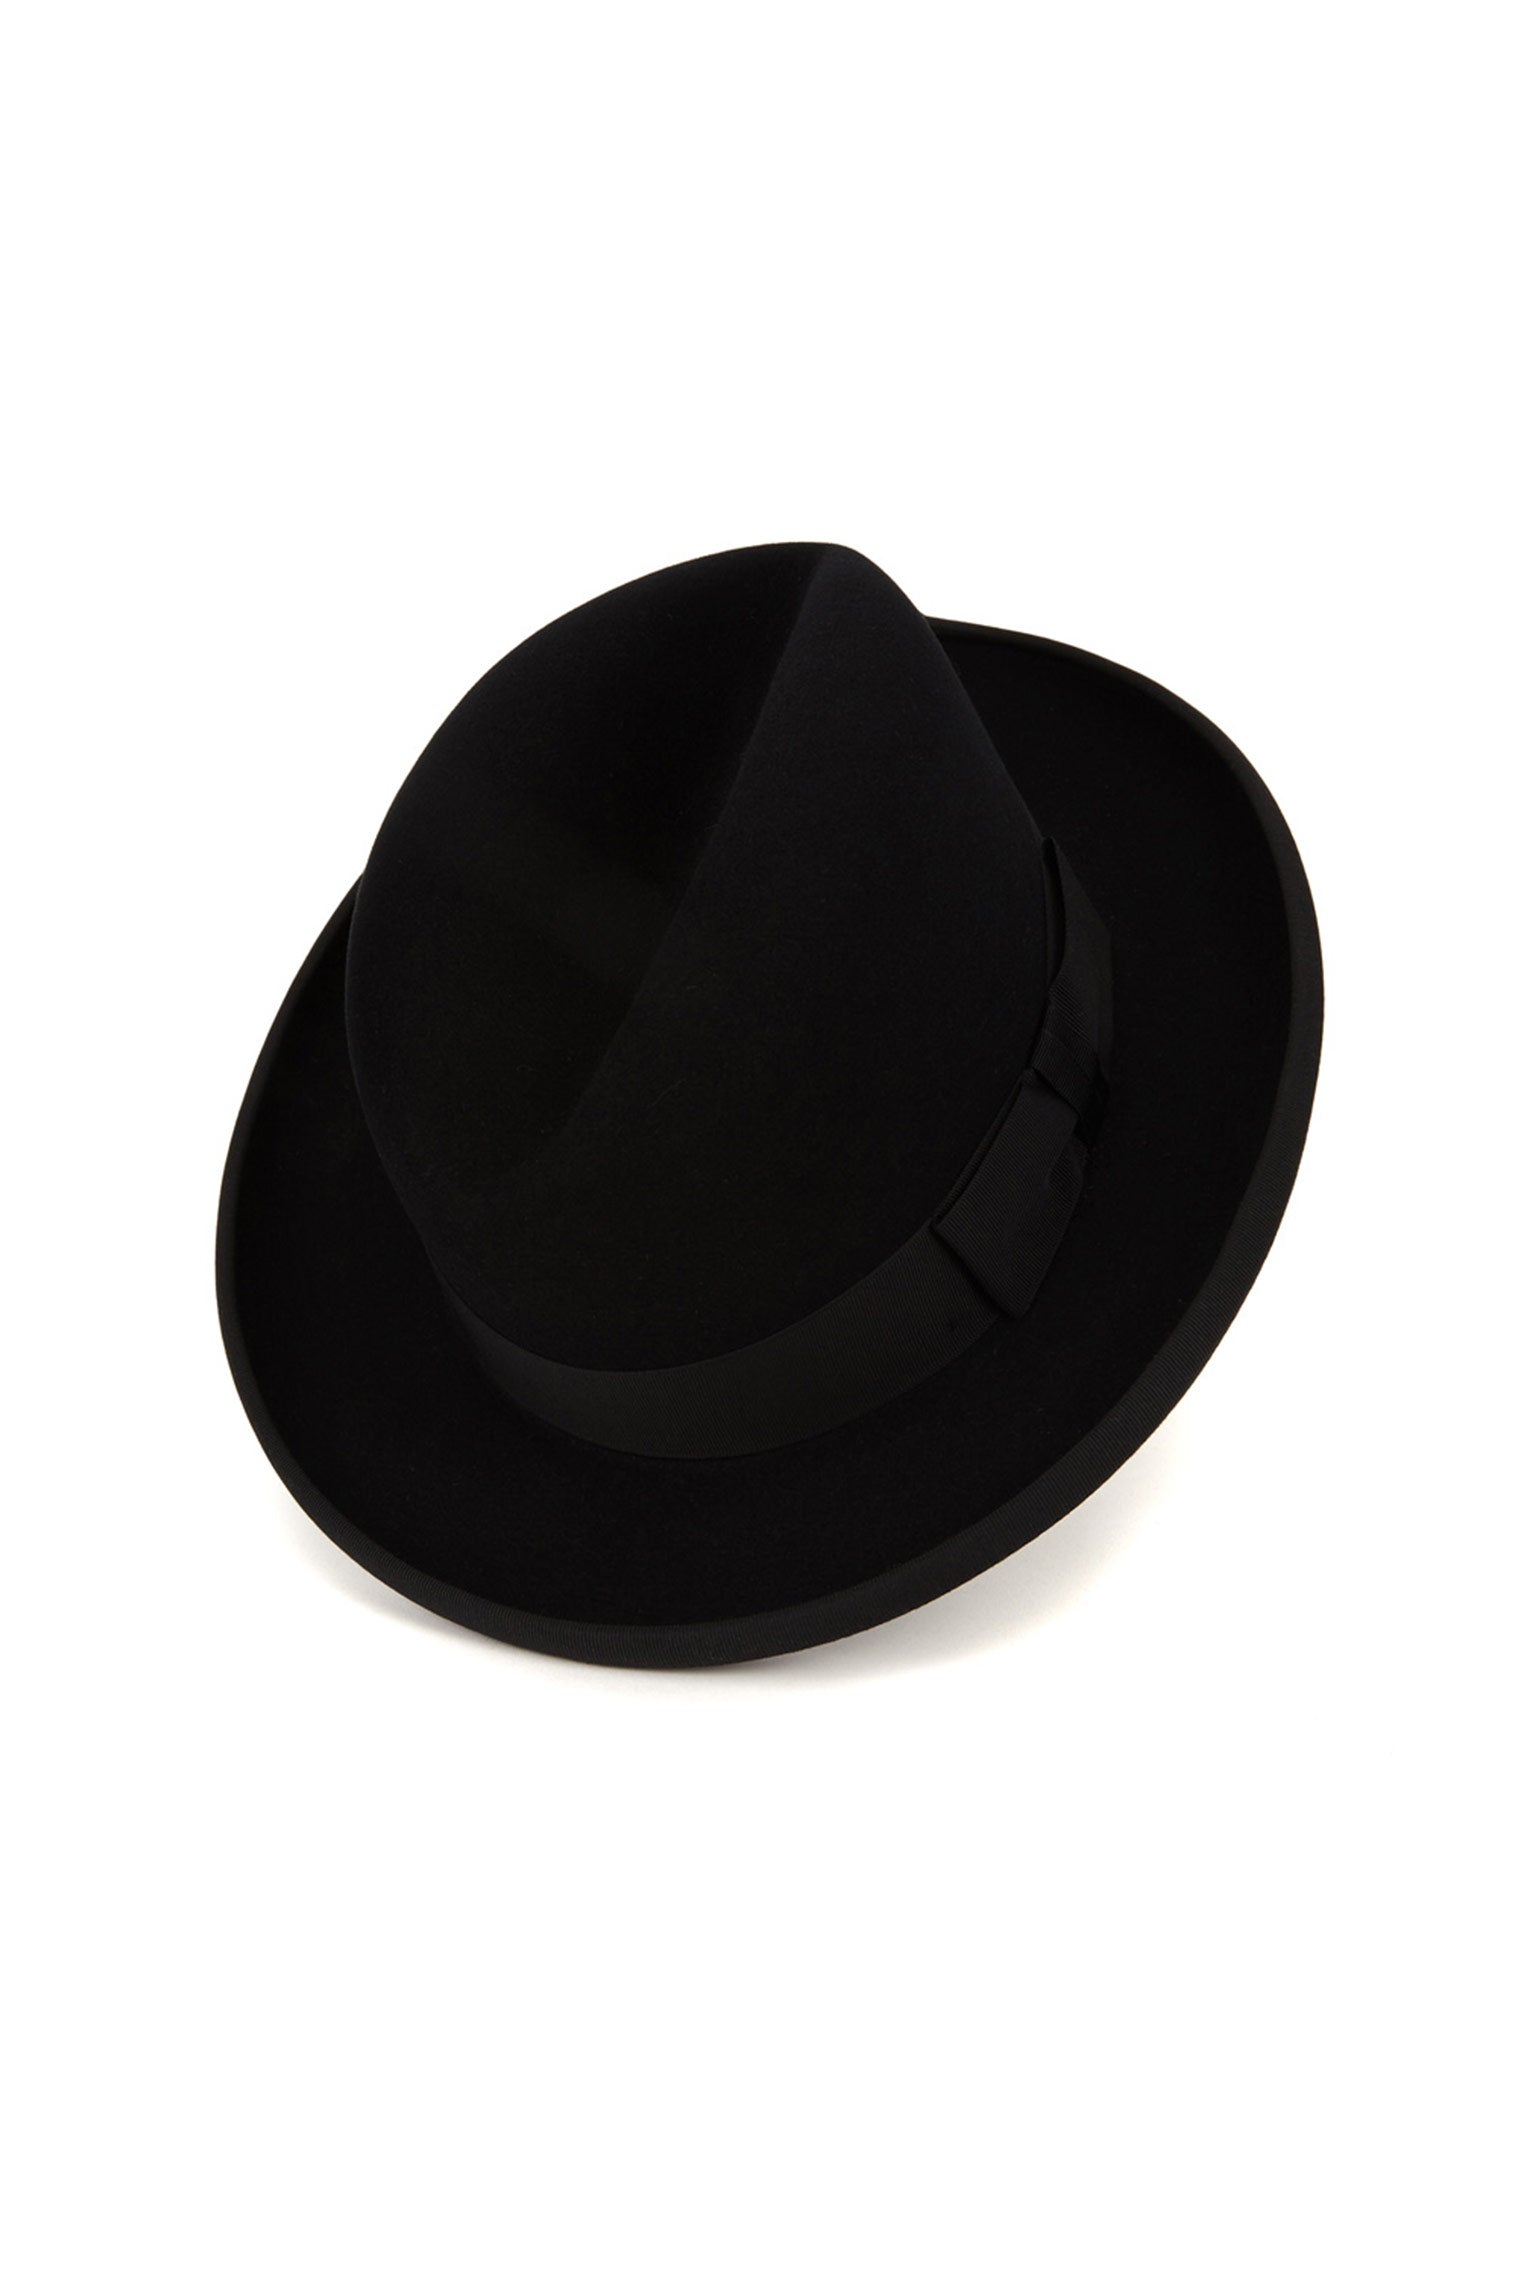 Eden Homburg - Hats for Oval Face Shapes - Lock & Co. Hatters London UK